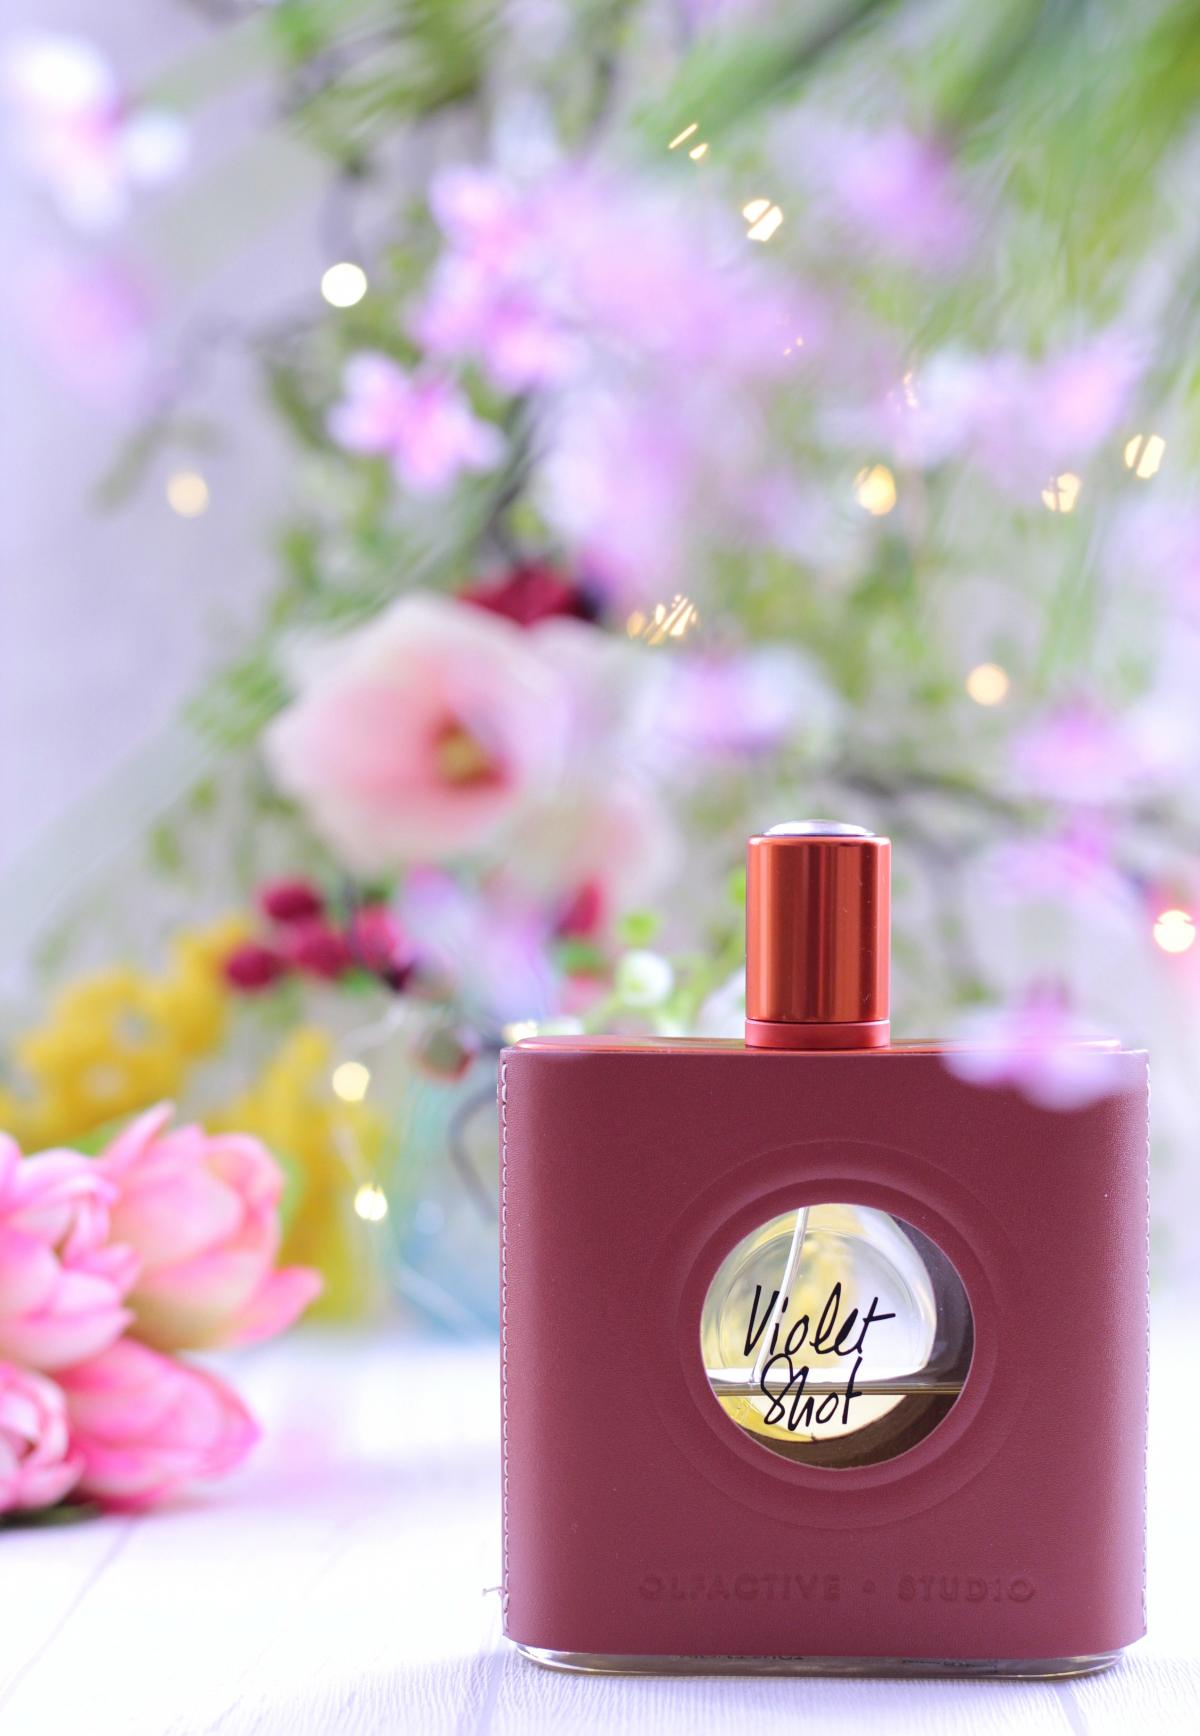 Violet Shot Olfactive Studio perfume - a fragrance for women and men 2019